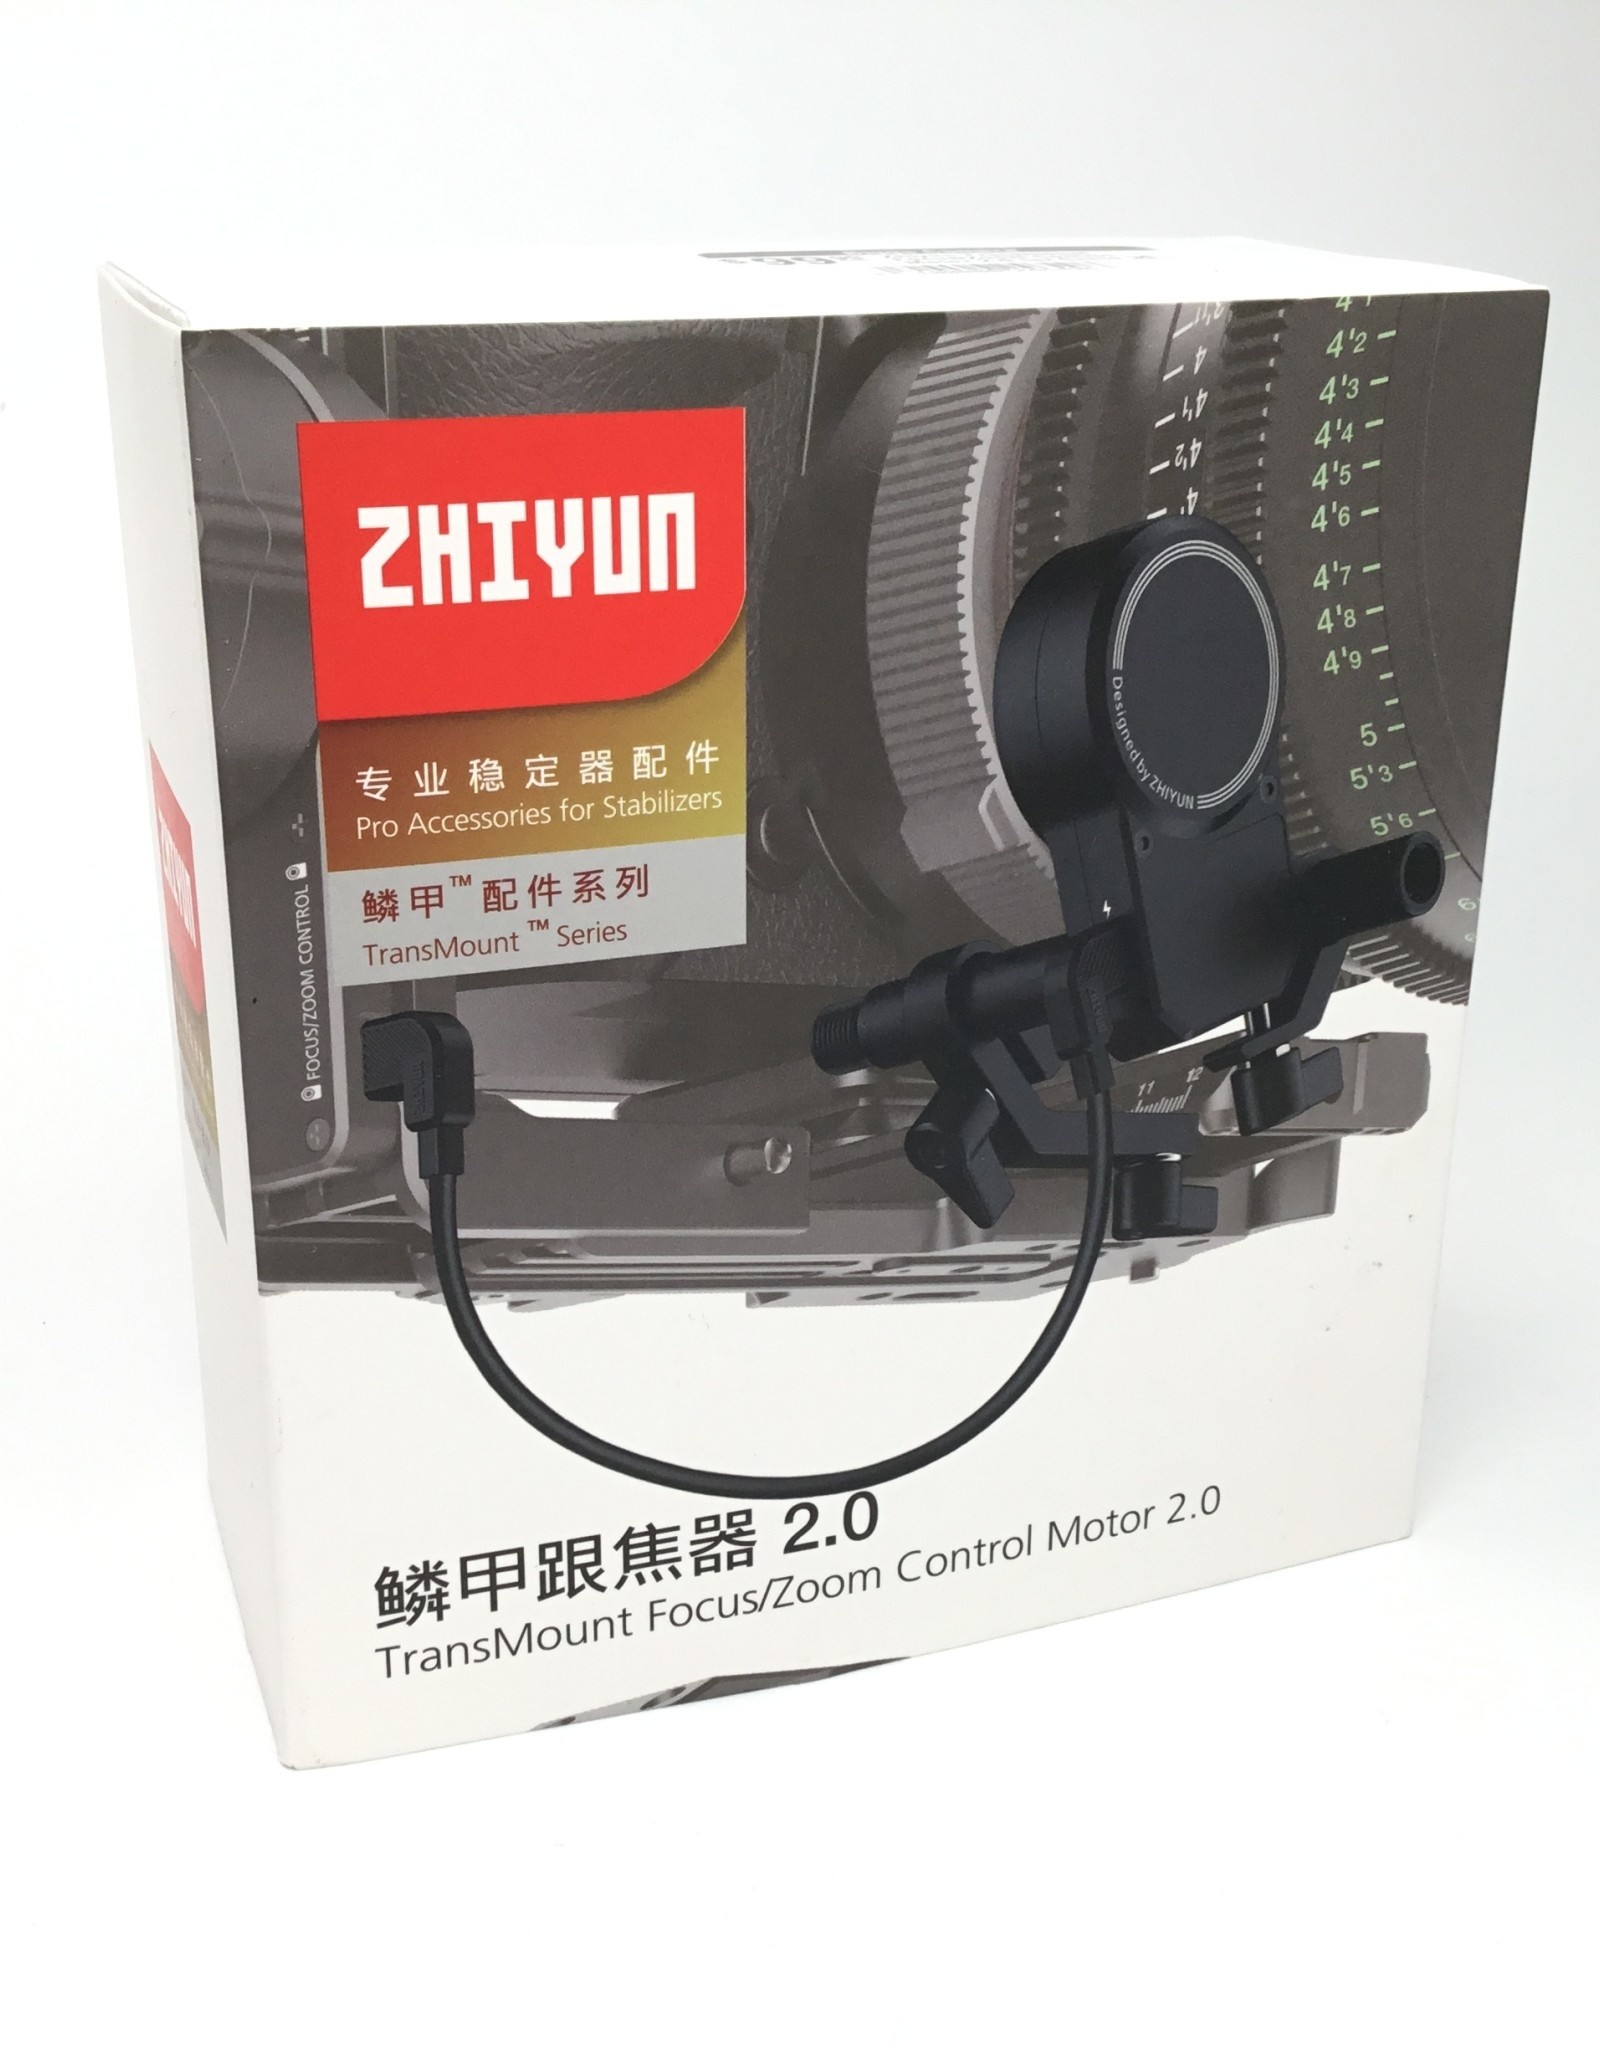 Zhiyun Transmount Focus/Zoom Control Motor 2.0 for Crane 3S Used Good